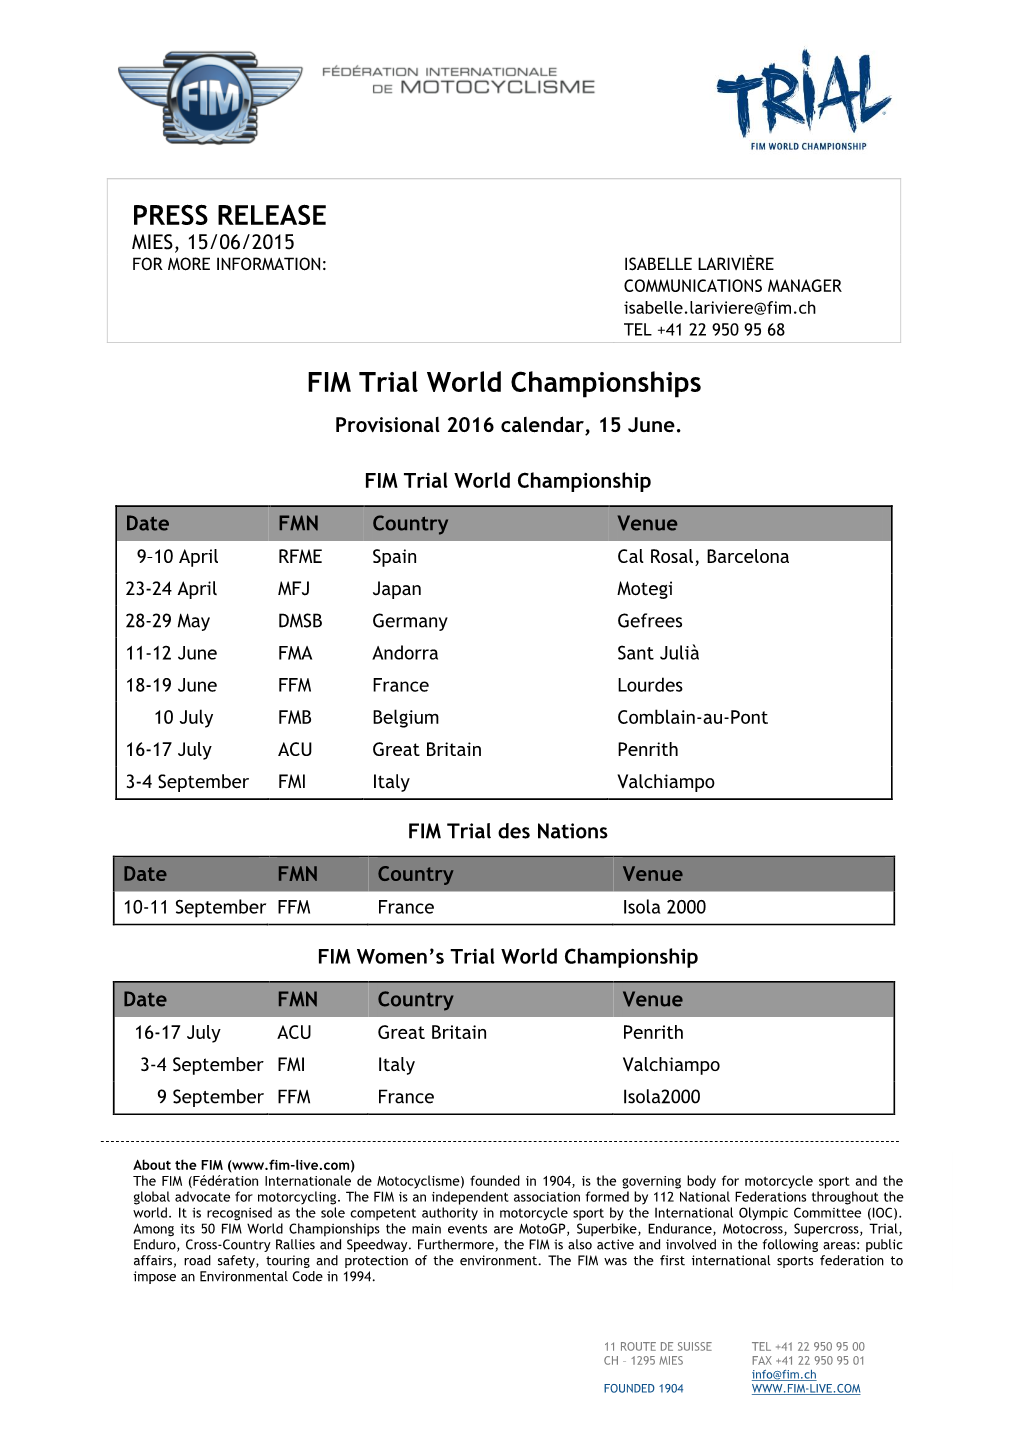 FIM Trial World Championships Provisional 2016 Calendar, 15 June